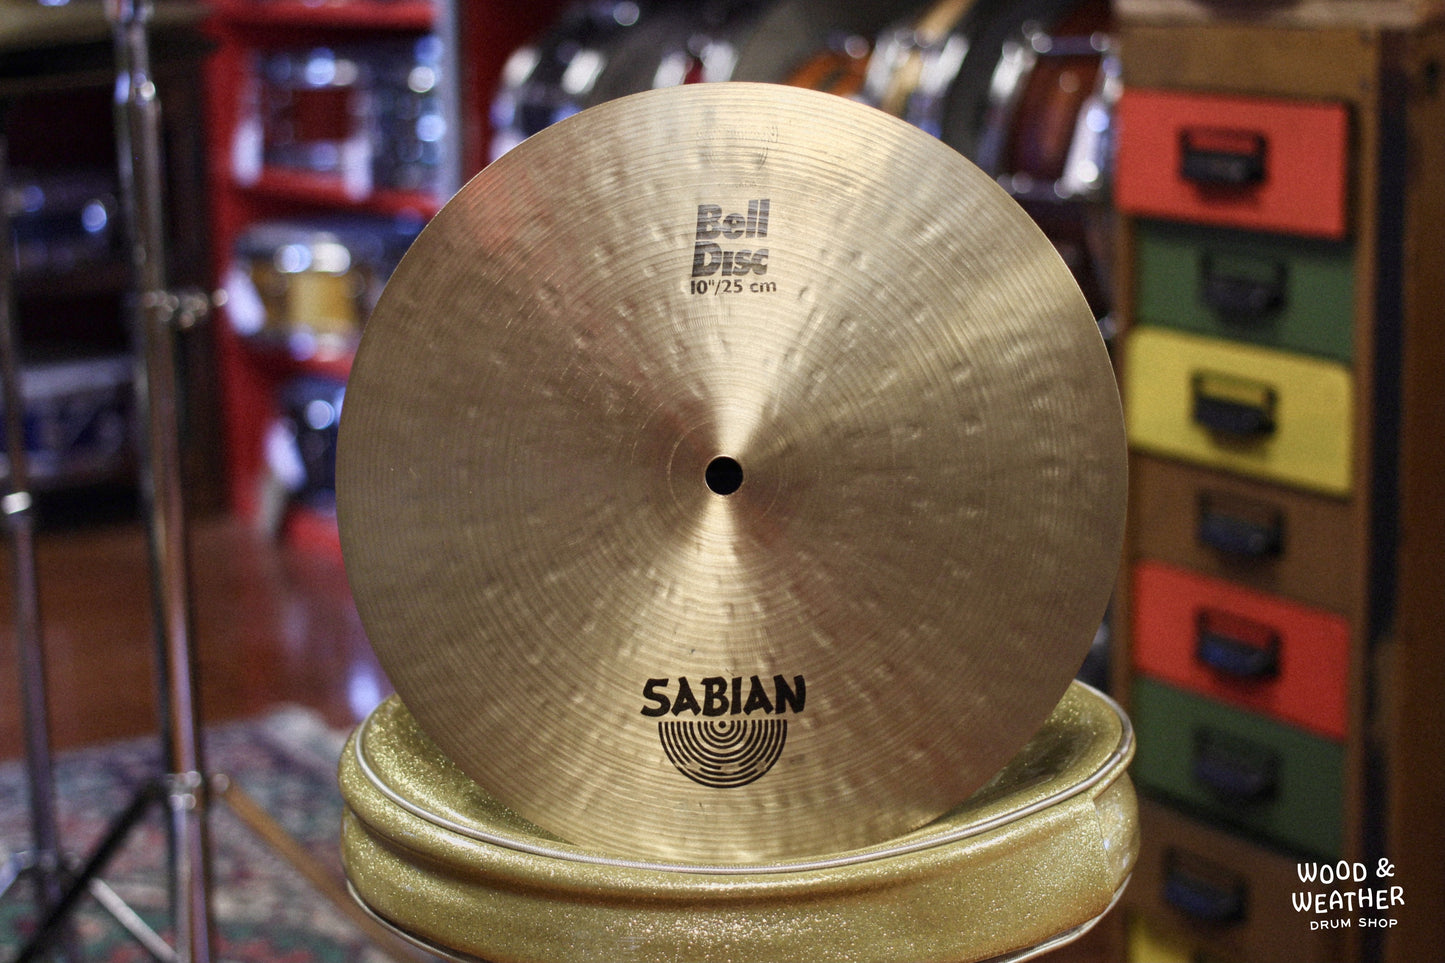 Used Sabian 10" Bell Disc Cymbal 1520g